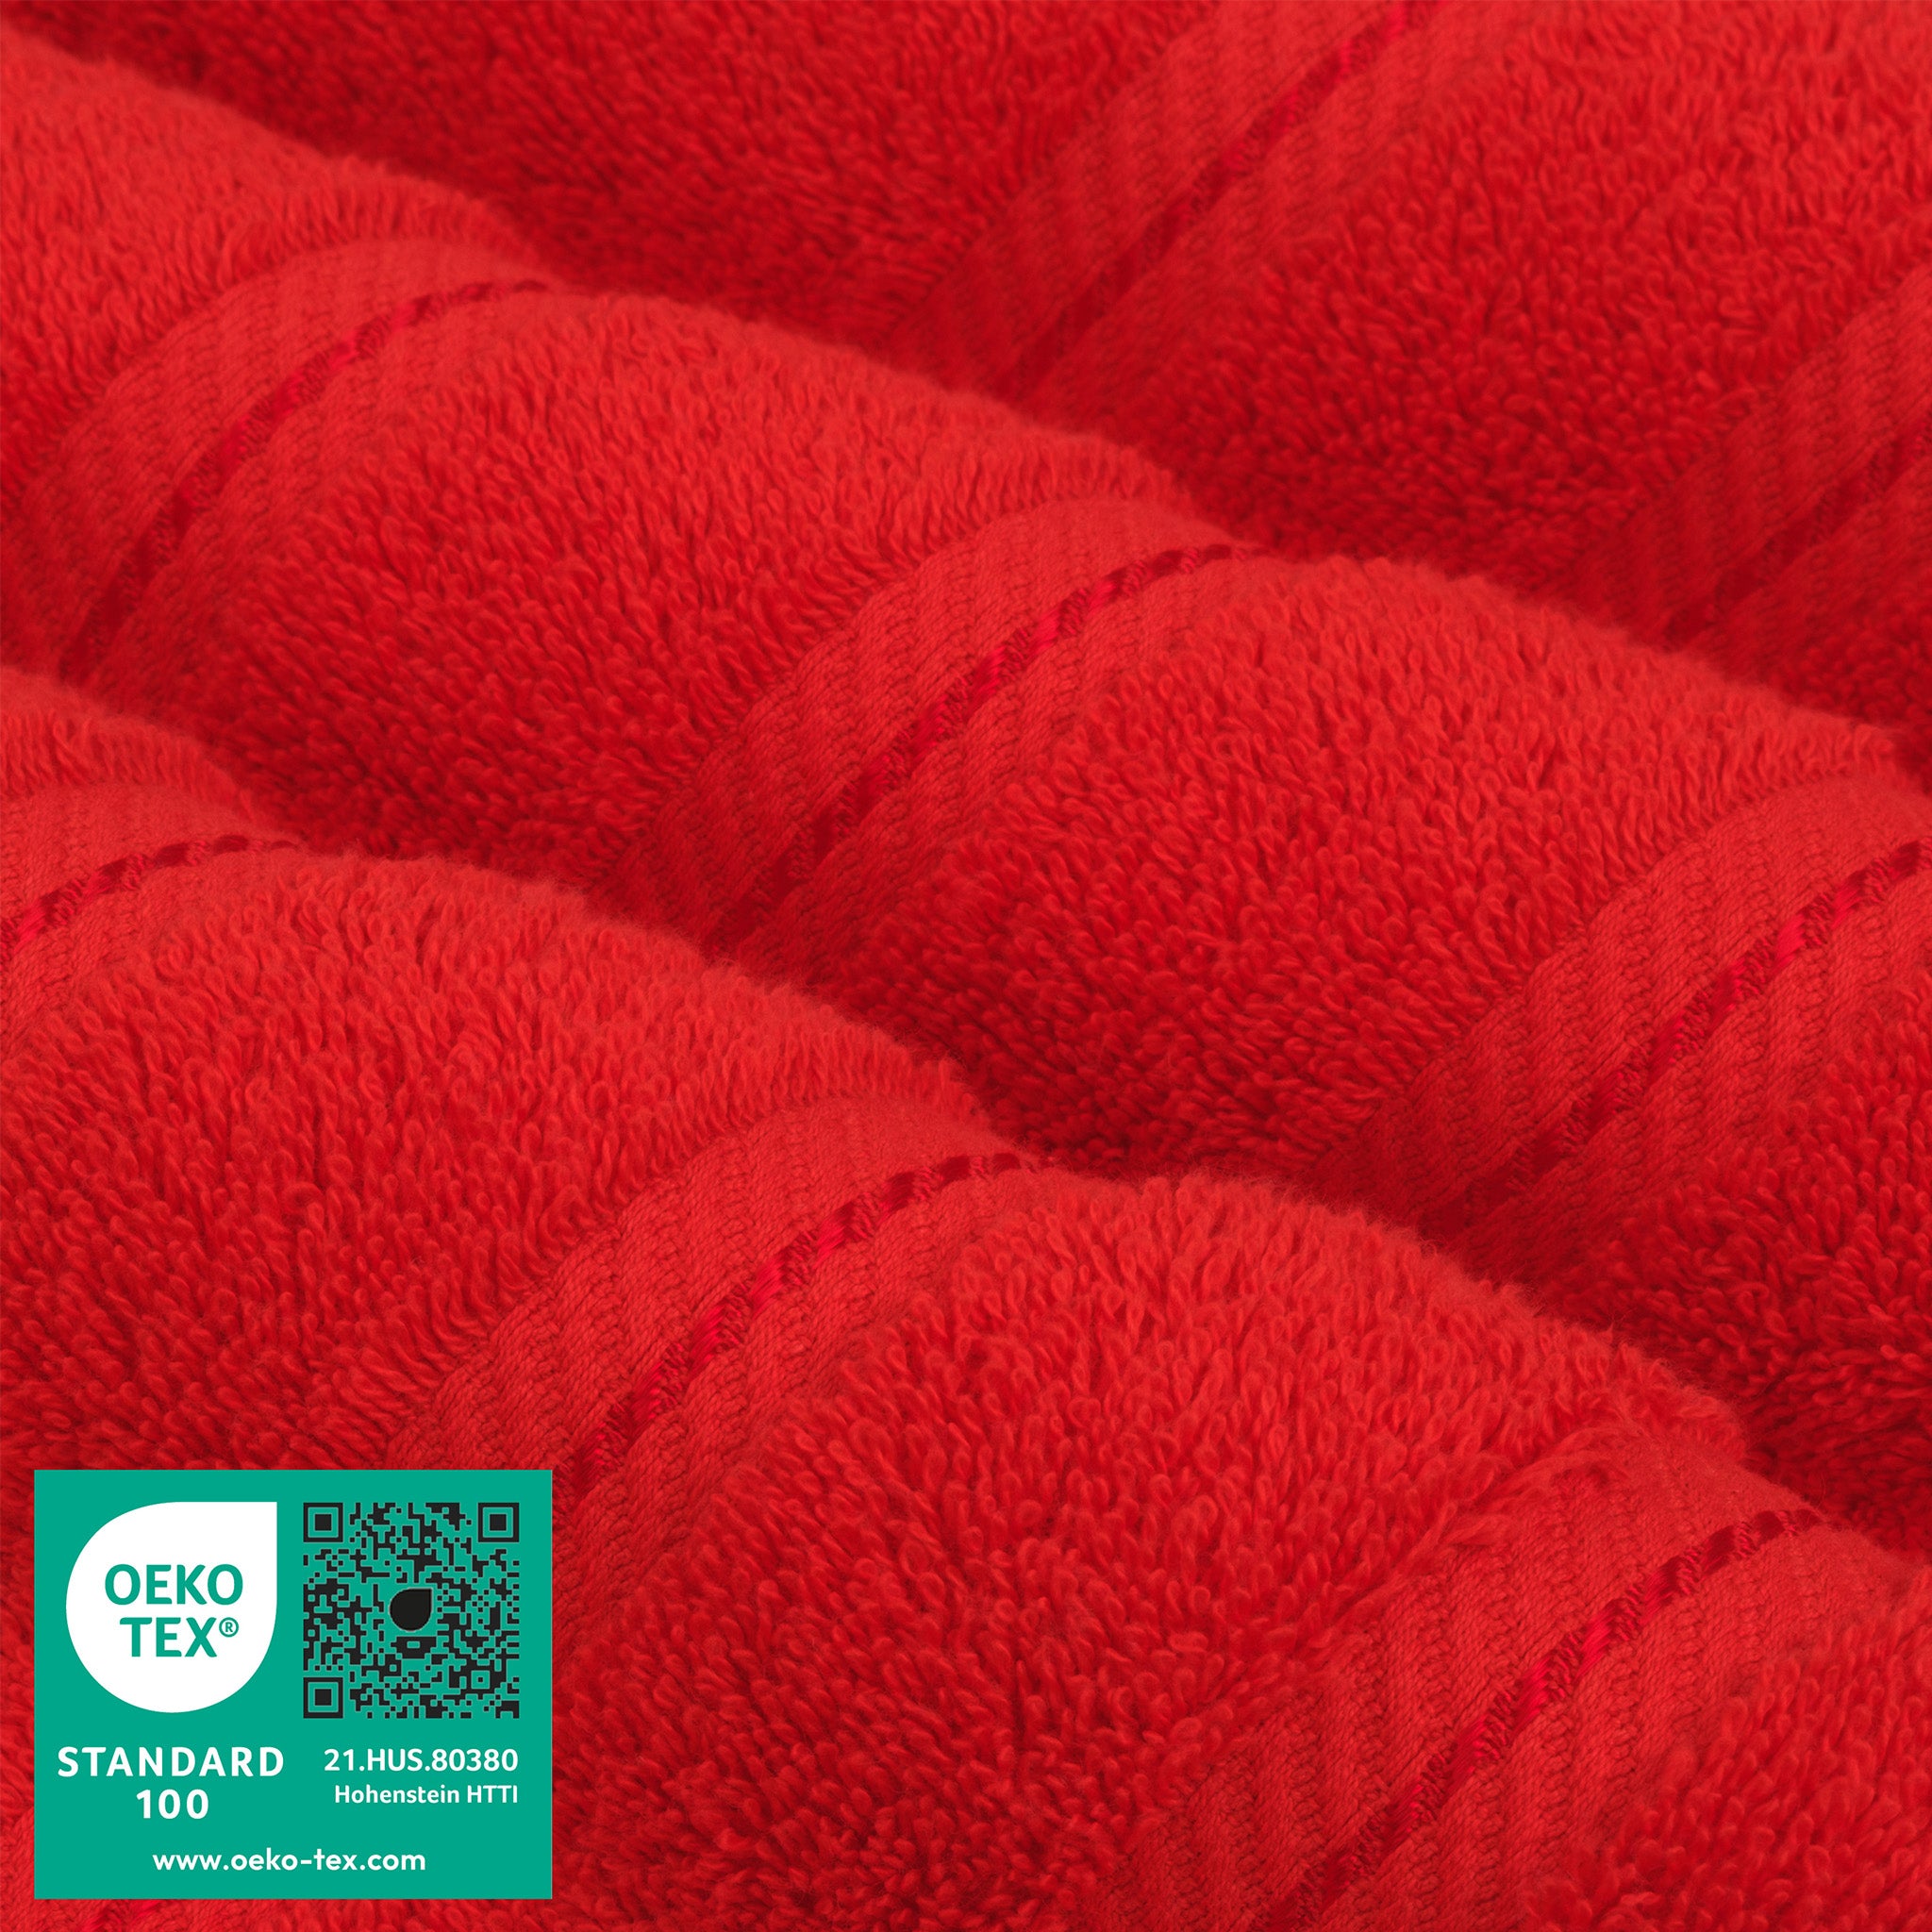 American Soft Linen 100% Turkish Cotton 4 Pack Bath Towel Set Wholesale red-3